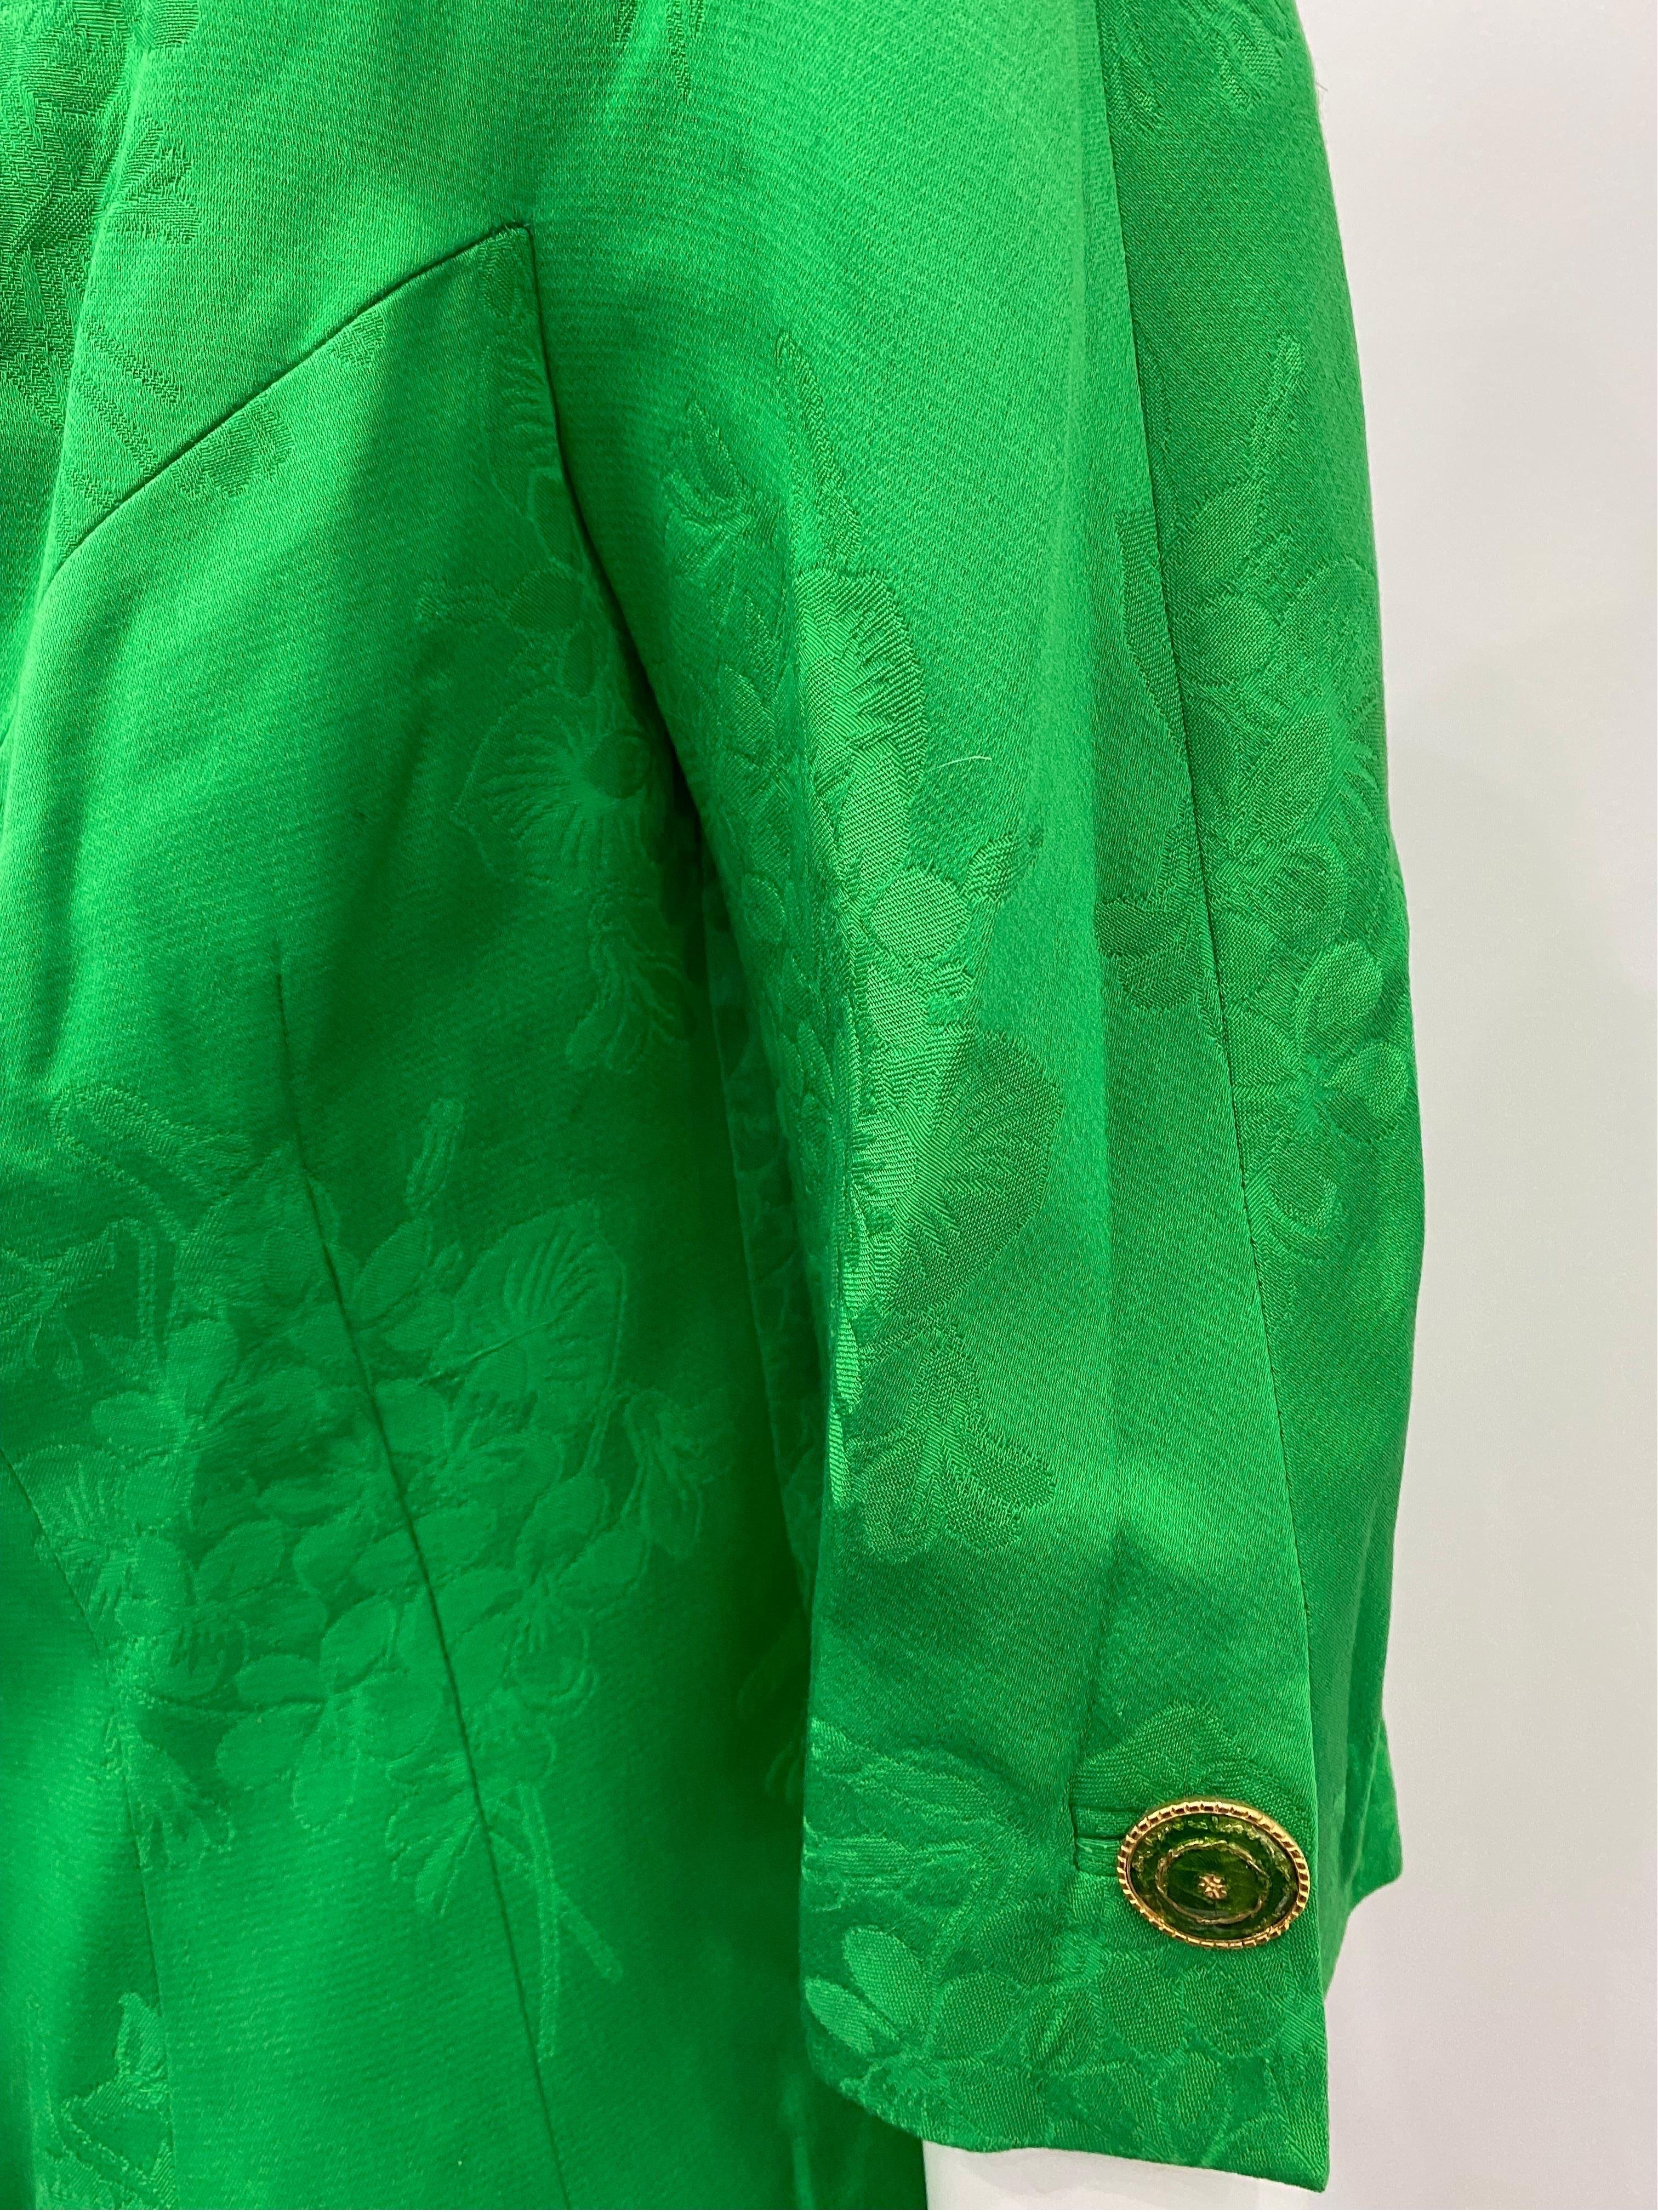 Gianni Versace Versatile Vintage Green Damask Silk Jacket - Size 42 For Sale 1